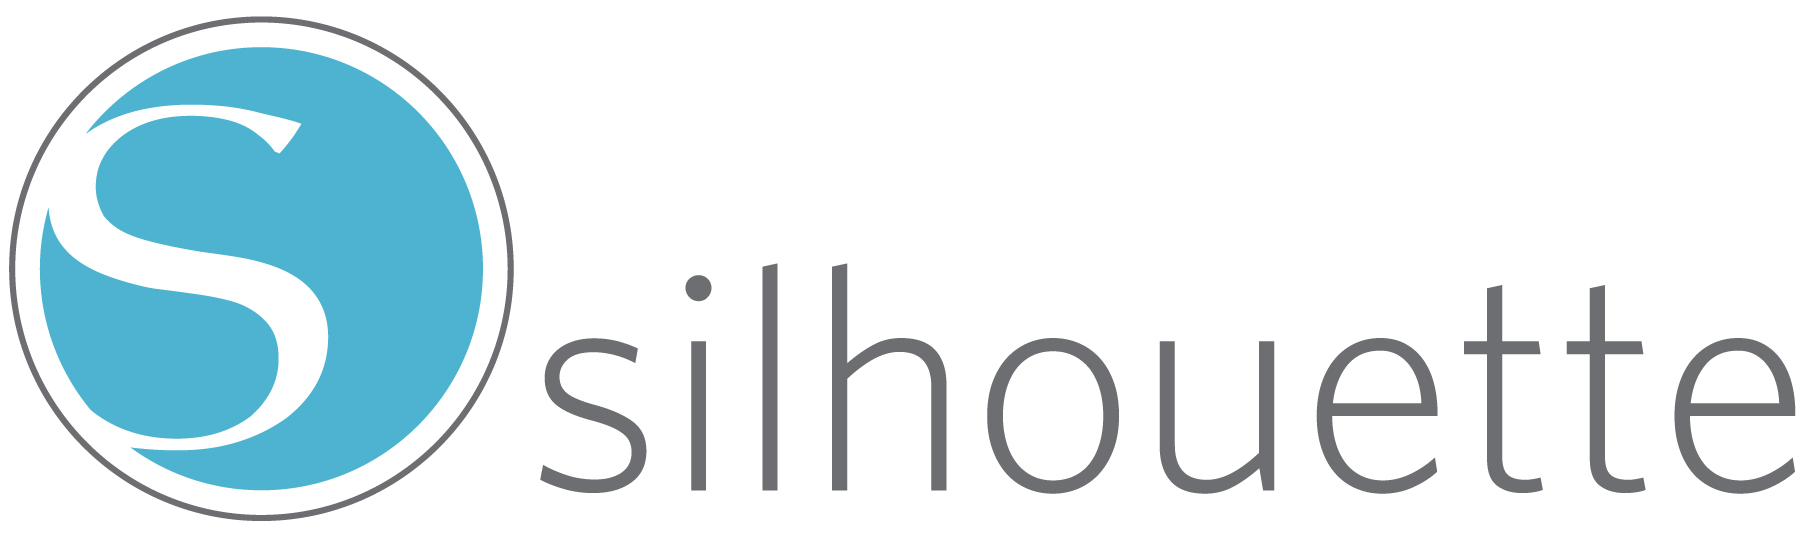 silhouette-logo-horizontal